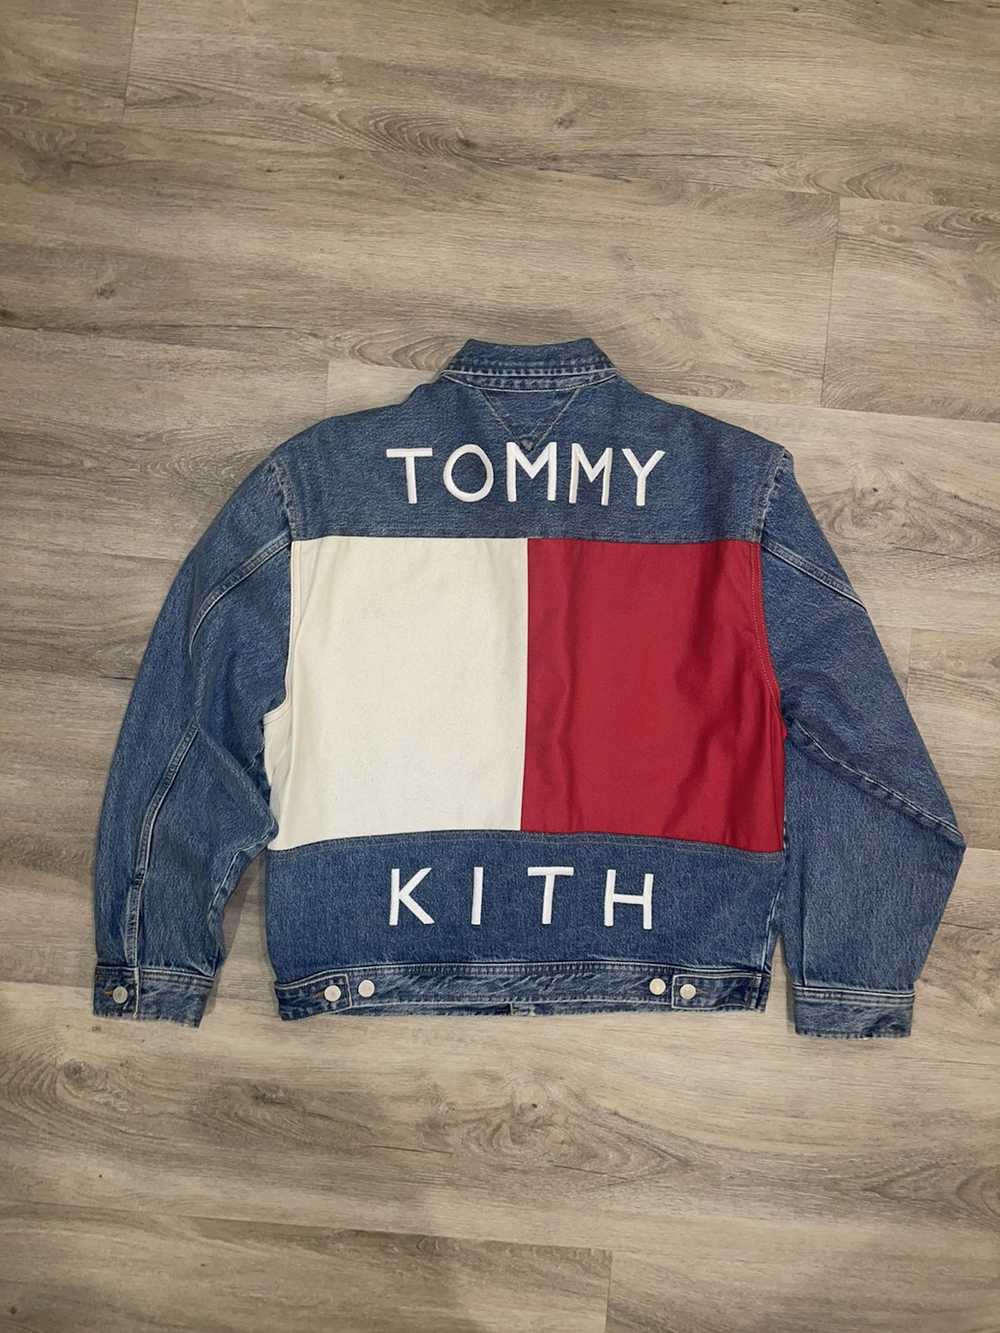 Kith × Tommy Hilfiger Kith x Tommy Denim jacket - image 1